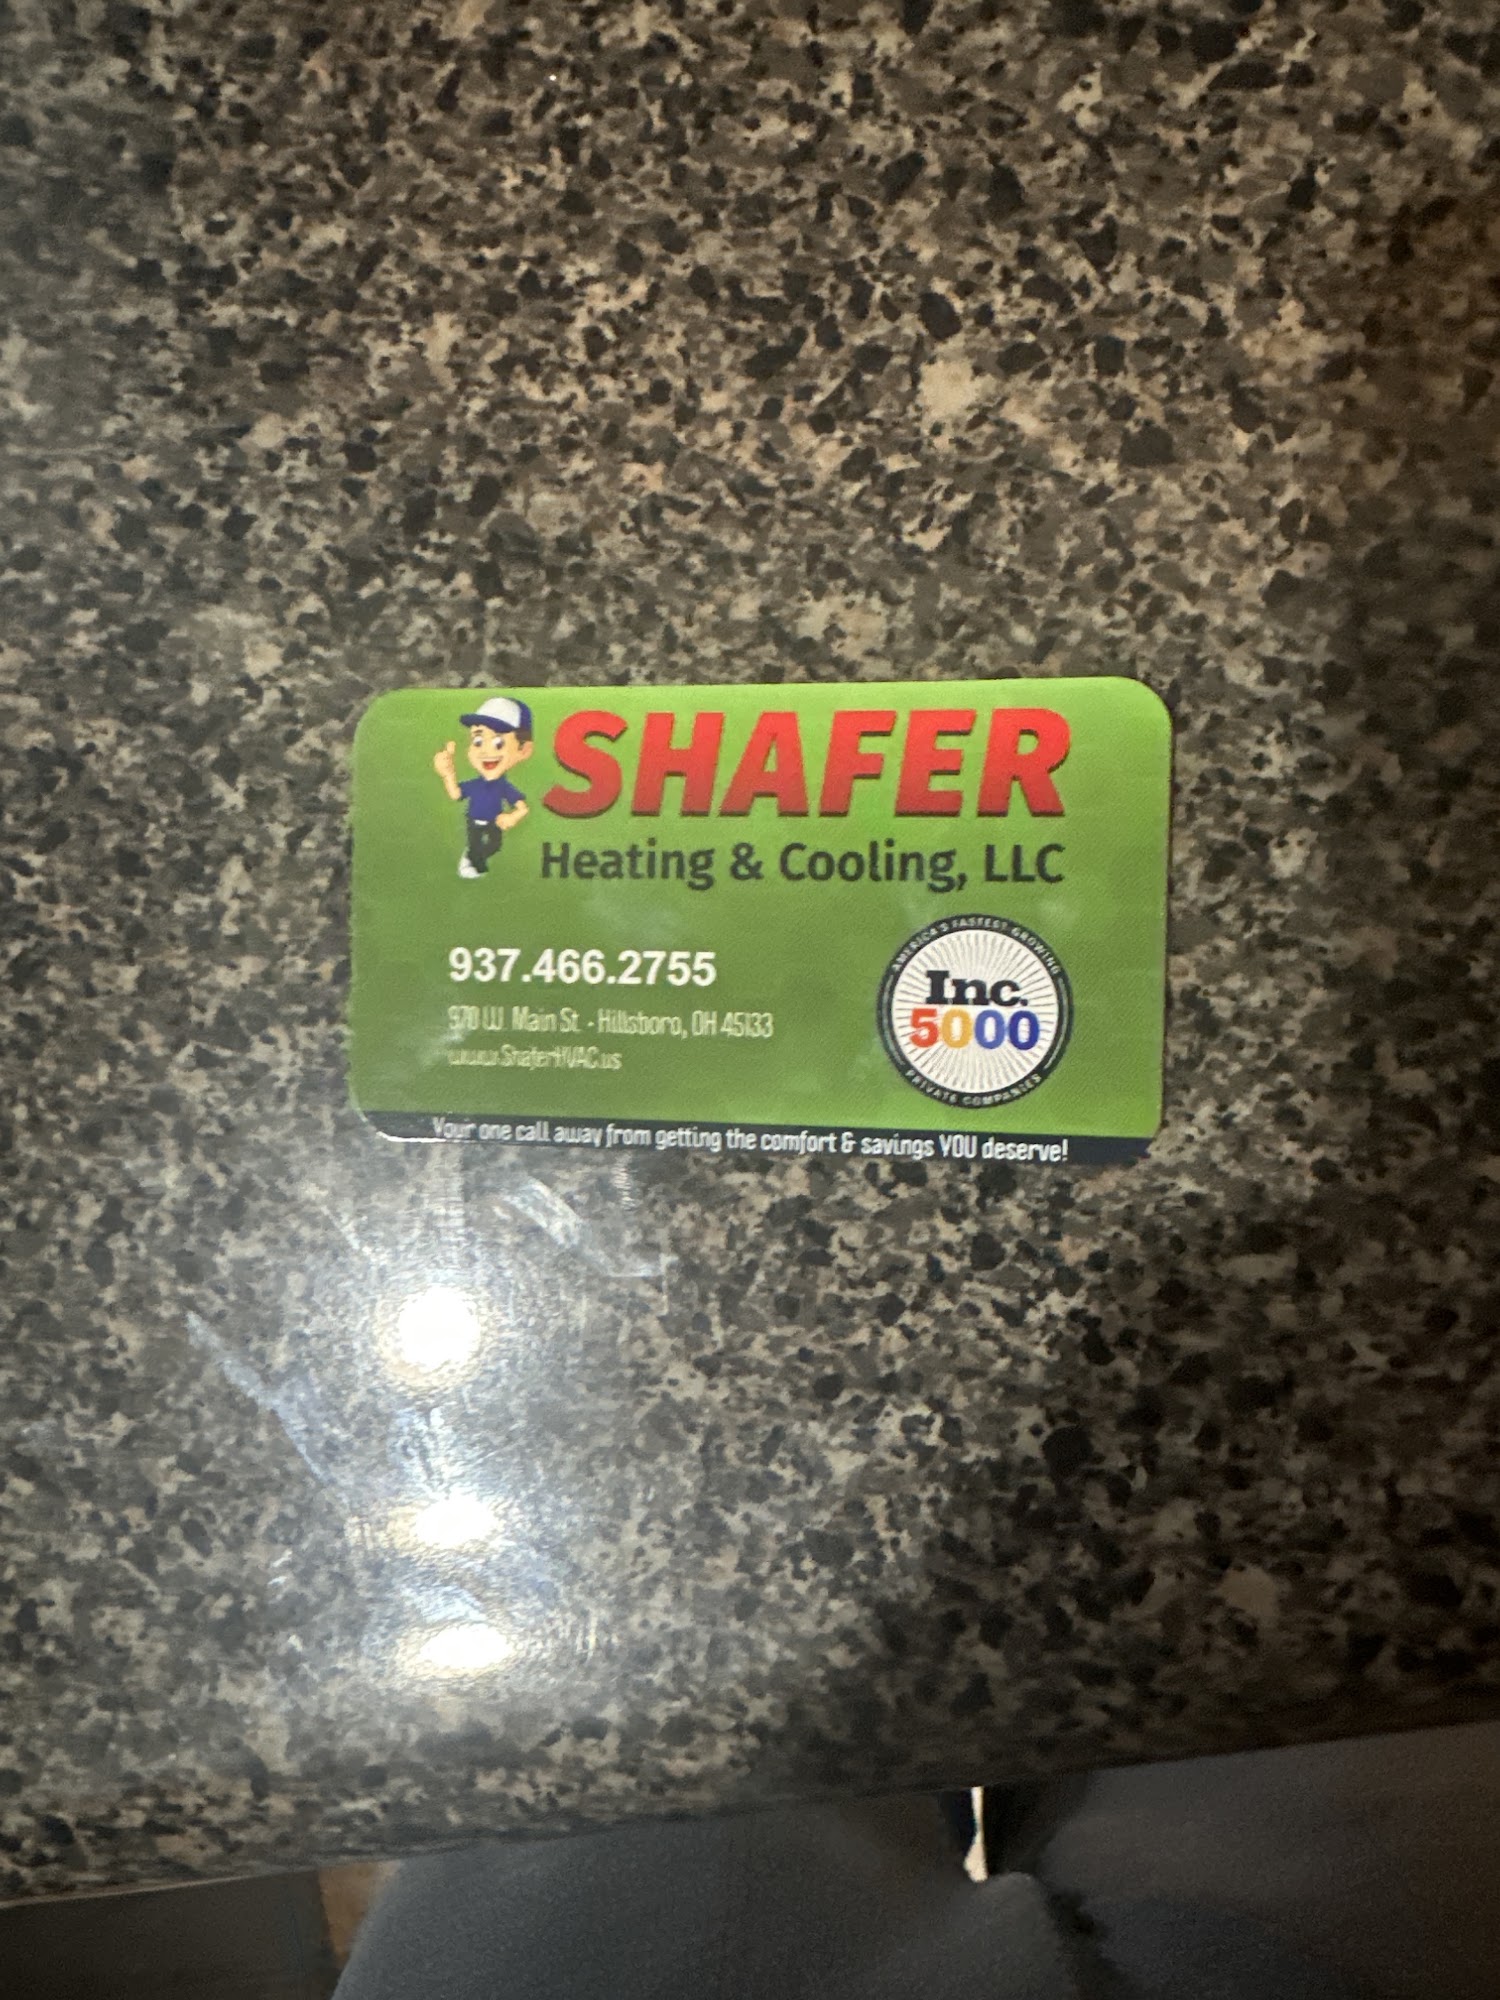 Shafer Heating & Cooling, LLC 970 W Main St, Hillsboro Ohio 45133